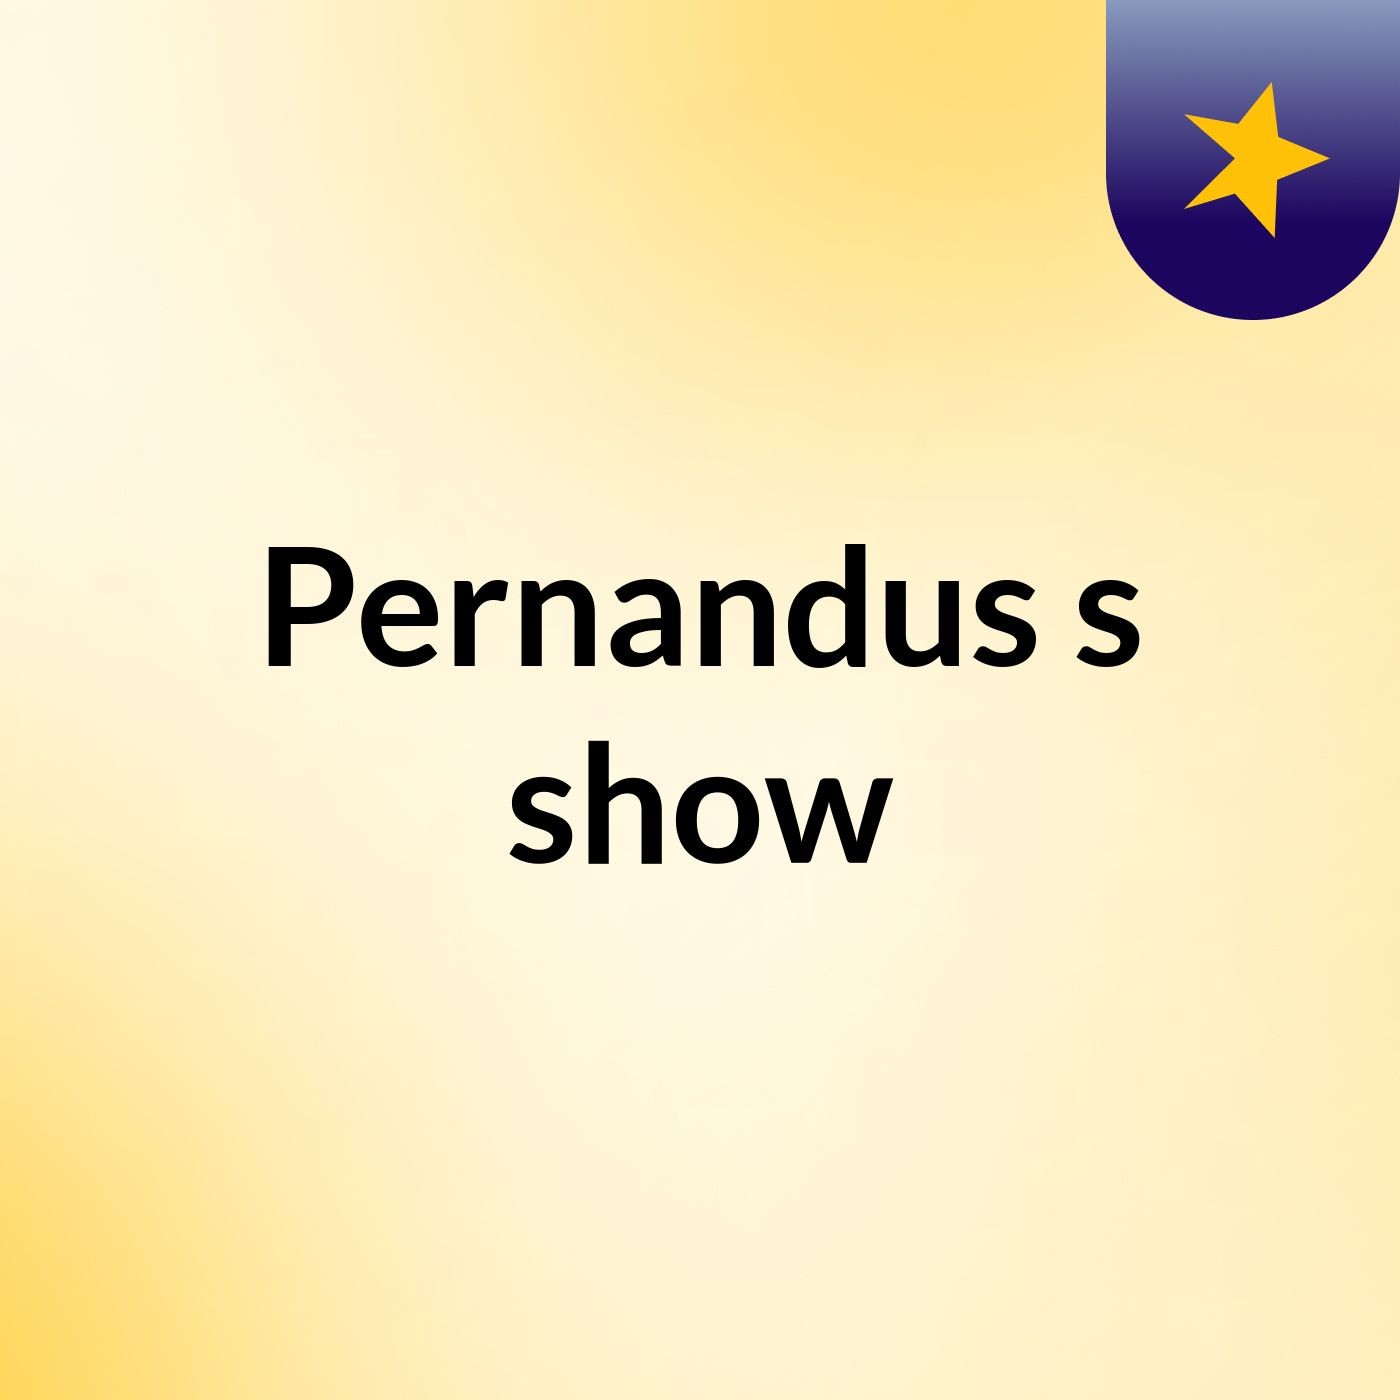 Pernandus's show